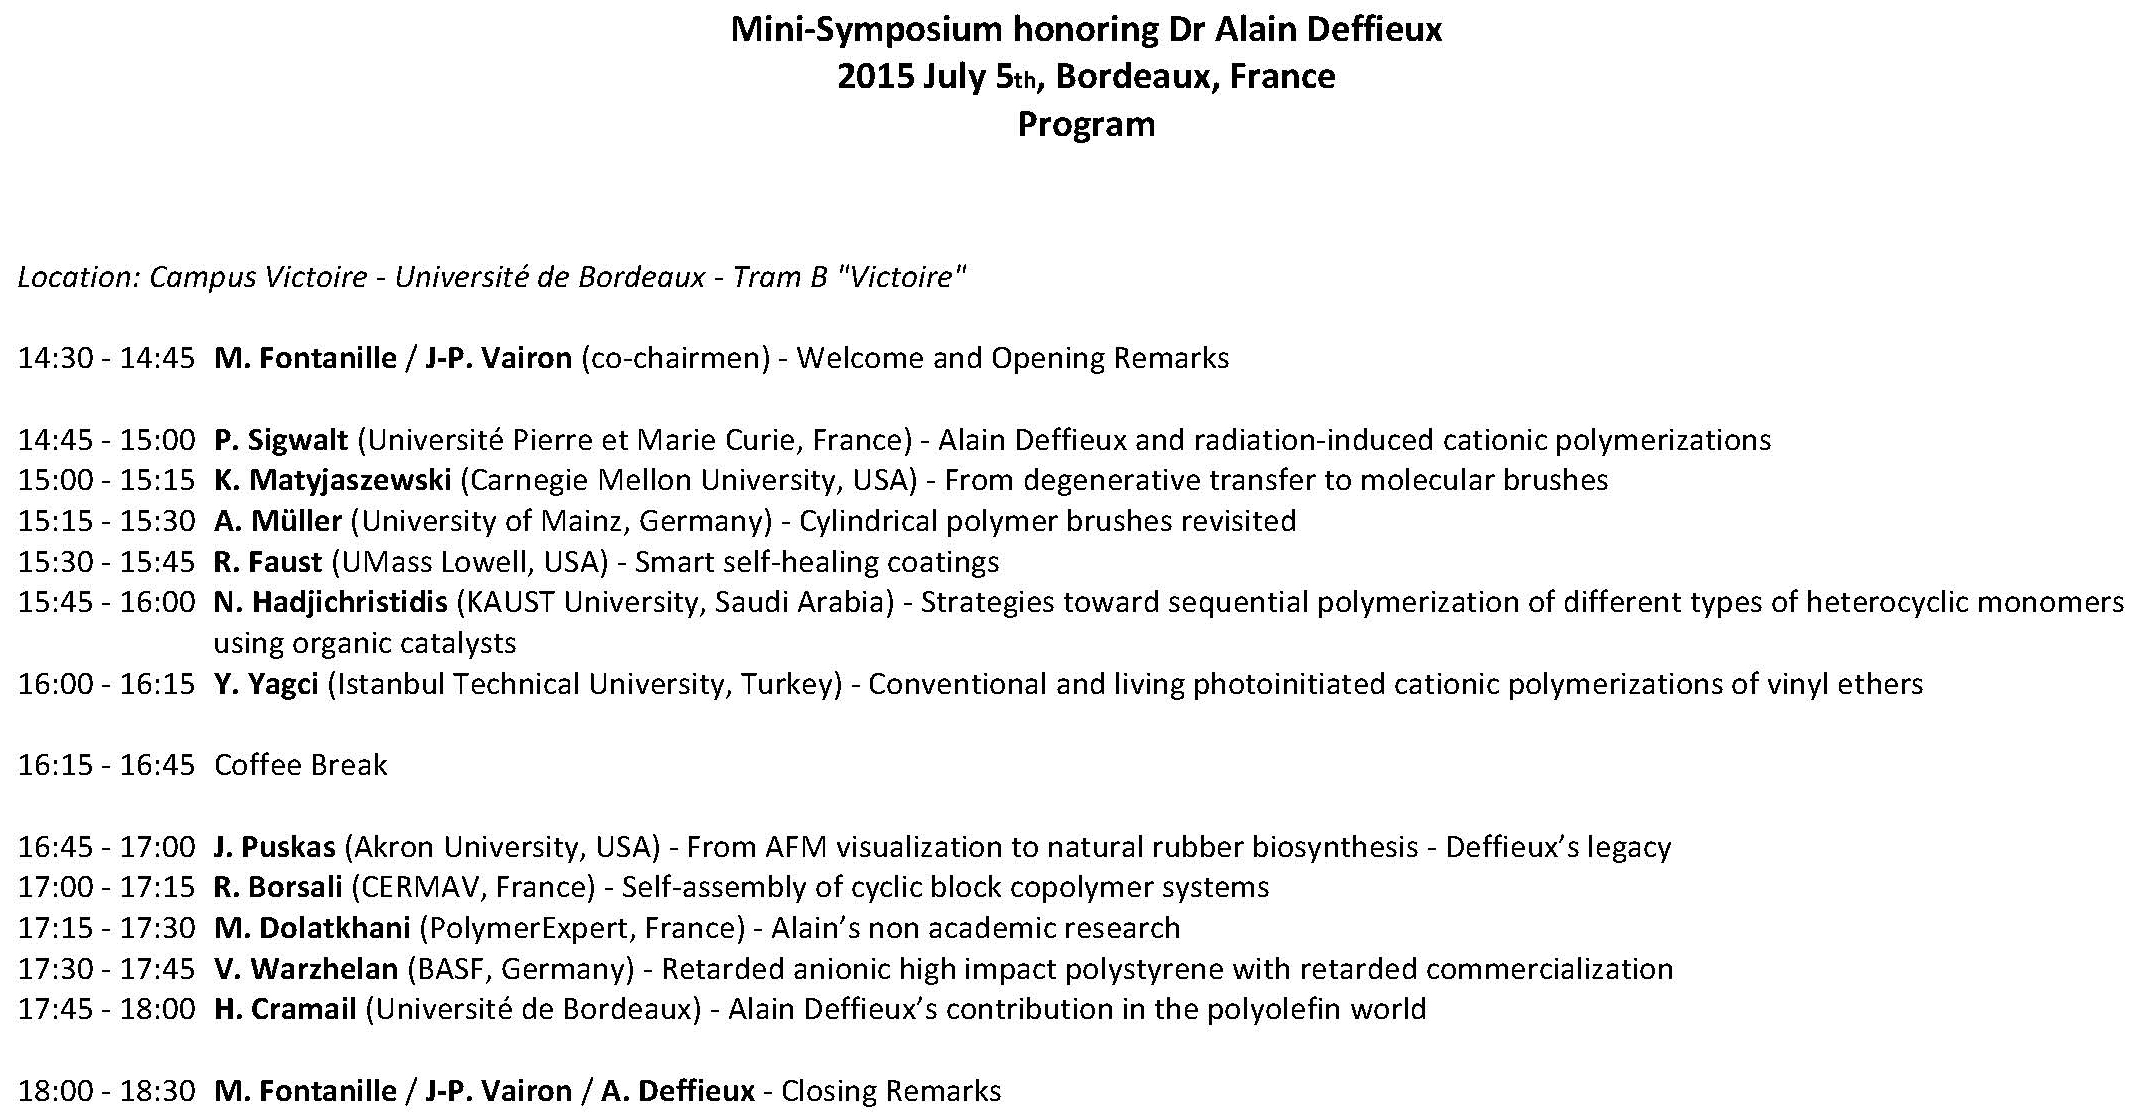 Programme_Mini_Symposium_Alain_Deffieux_01_06_2016.jpg